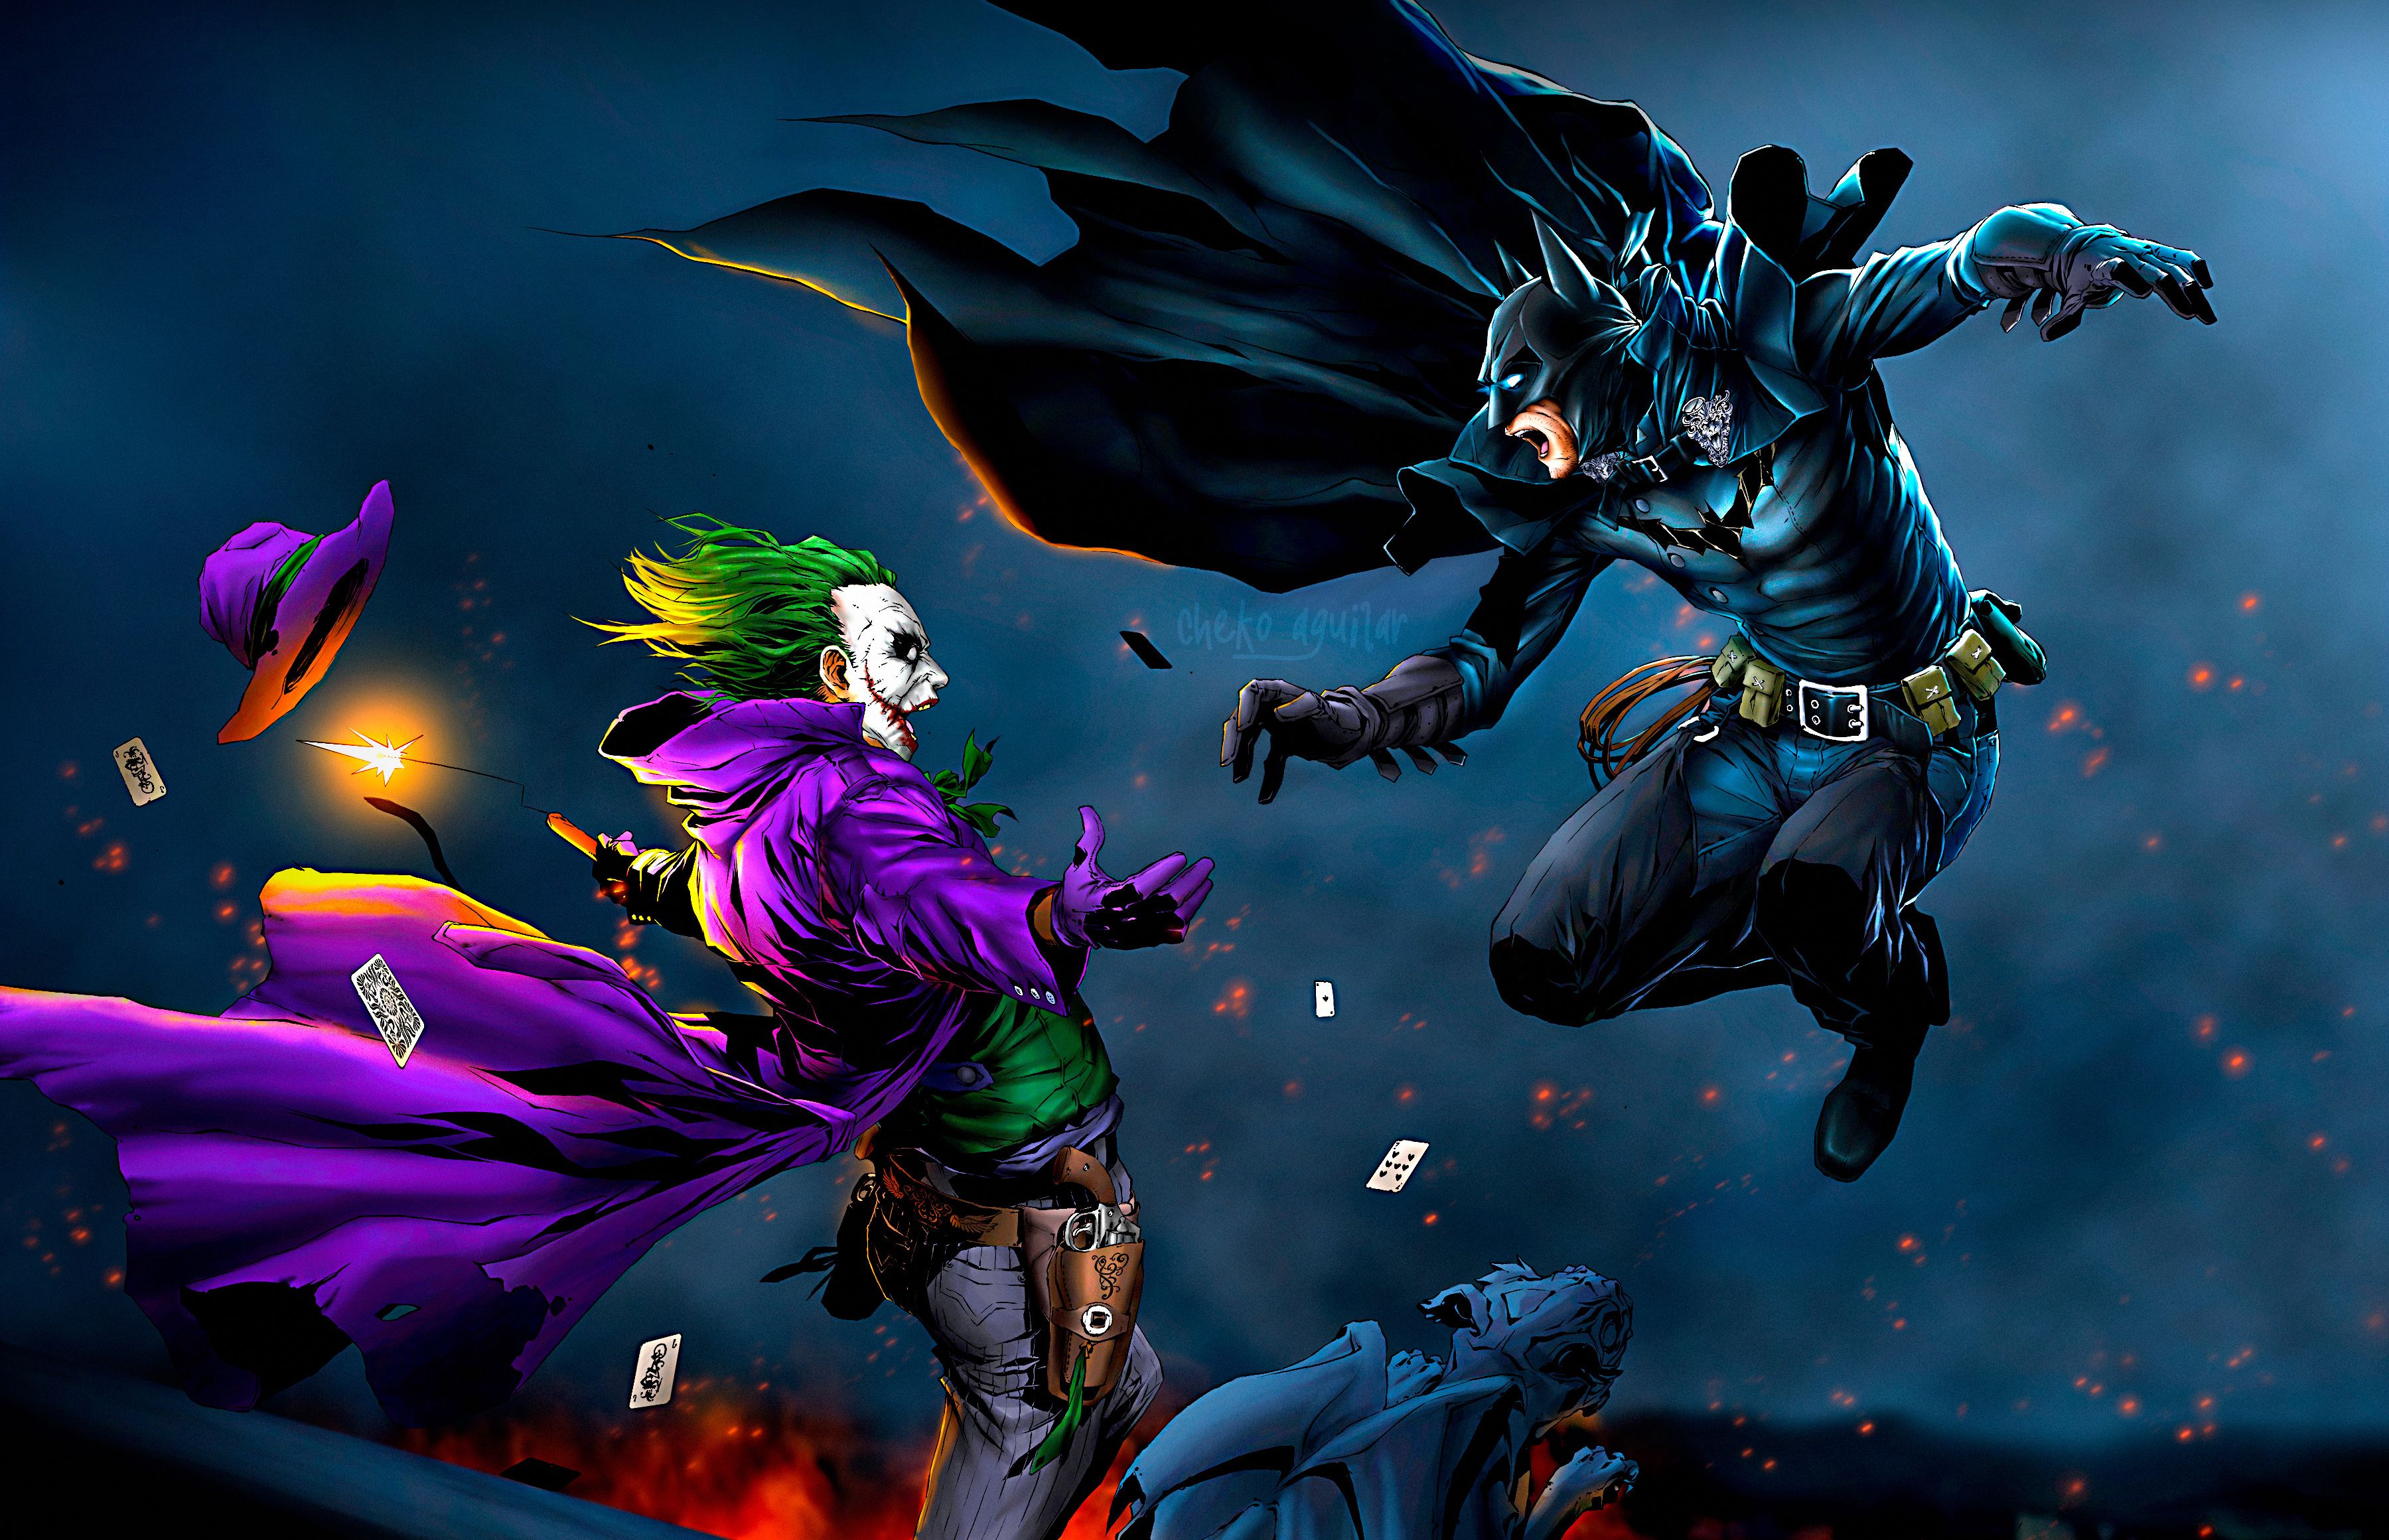 Joker vs batman wallpapers